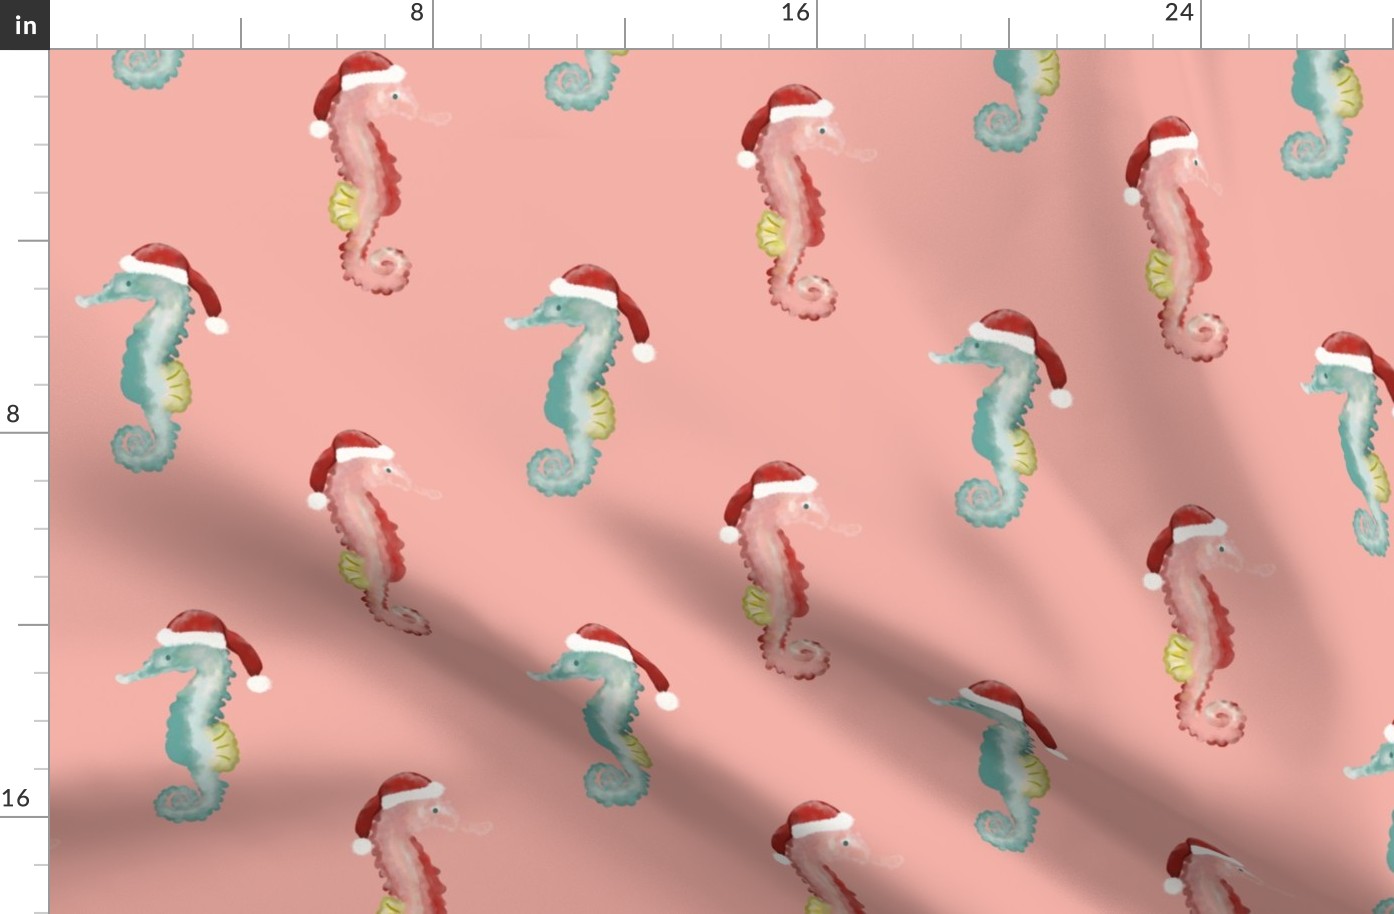 Seahorses, Christmas, Stockings, Rose, Pink, Sea Glass, Blue, jg_anchor_designs